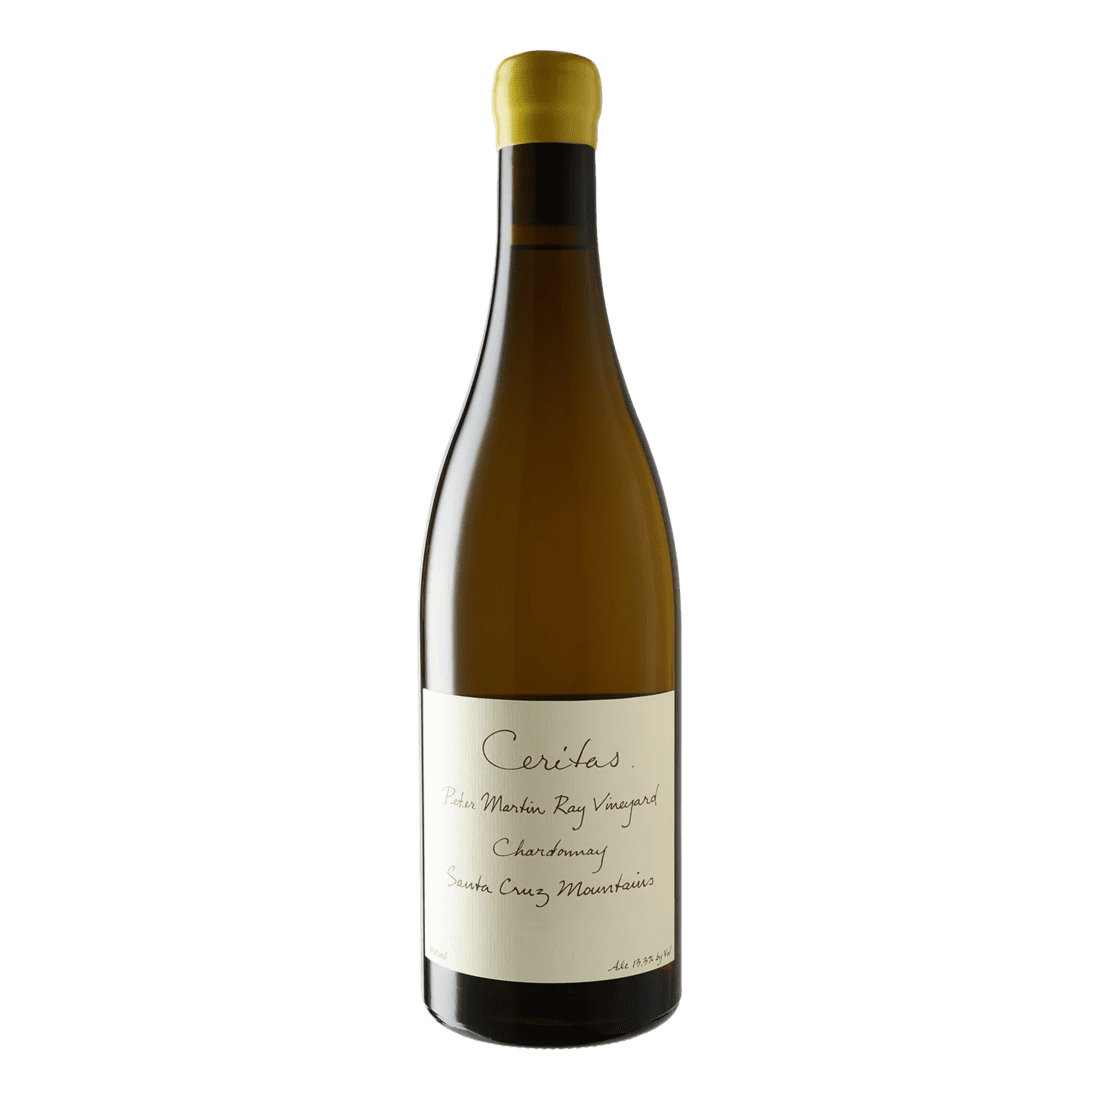 Ceritas, Peter Martin Ray Vineyard Chardonnay, Santa Cruz Mountains